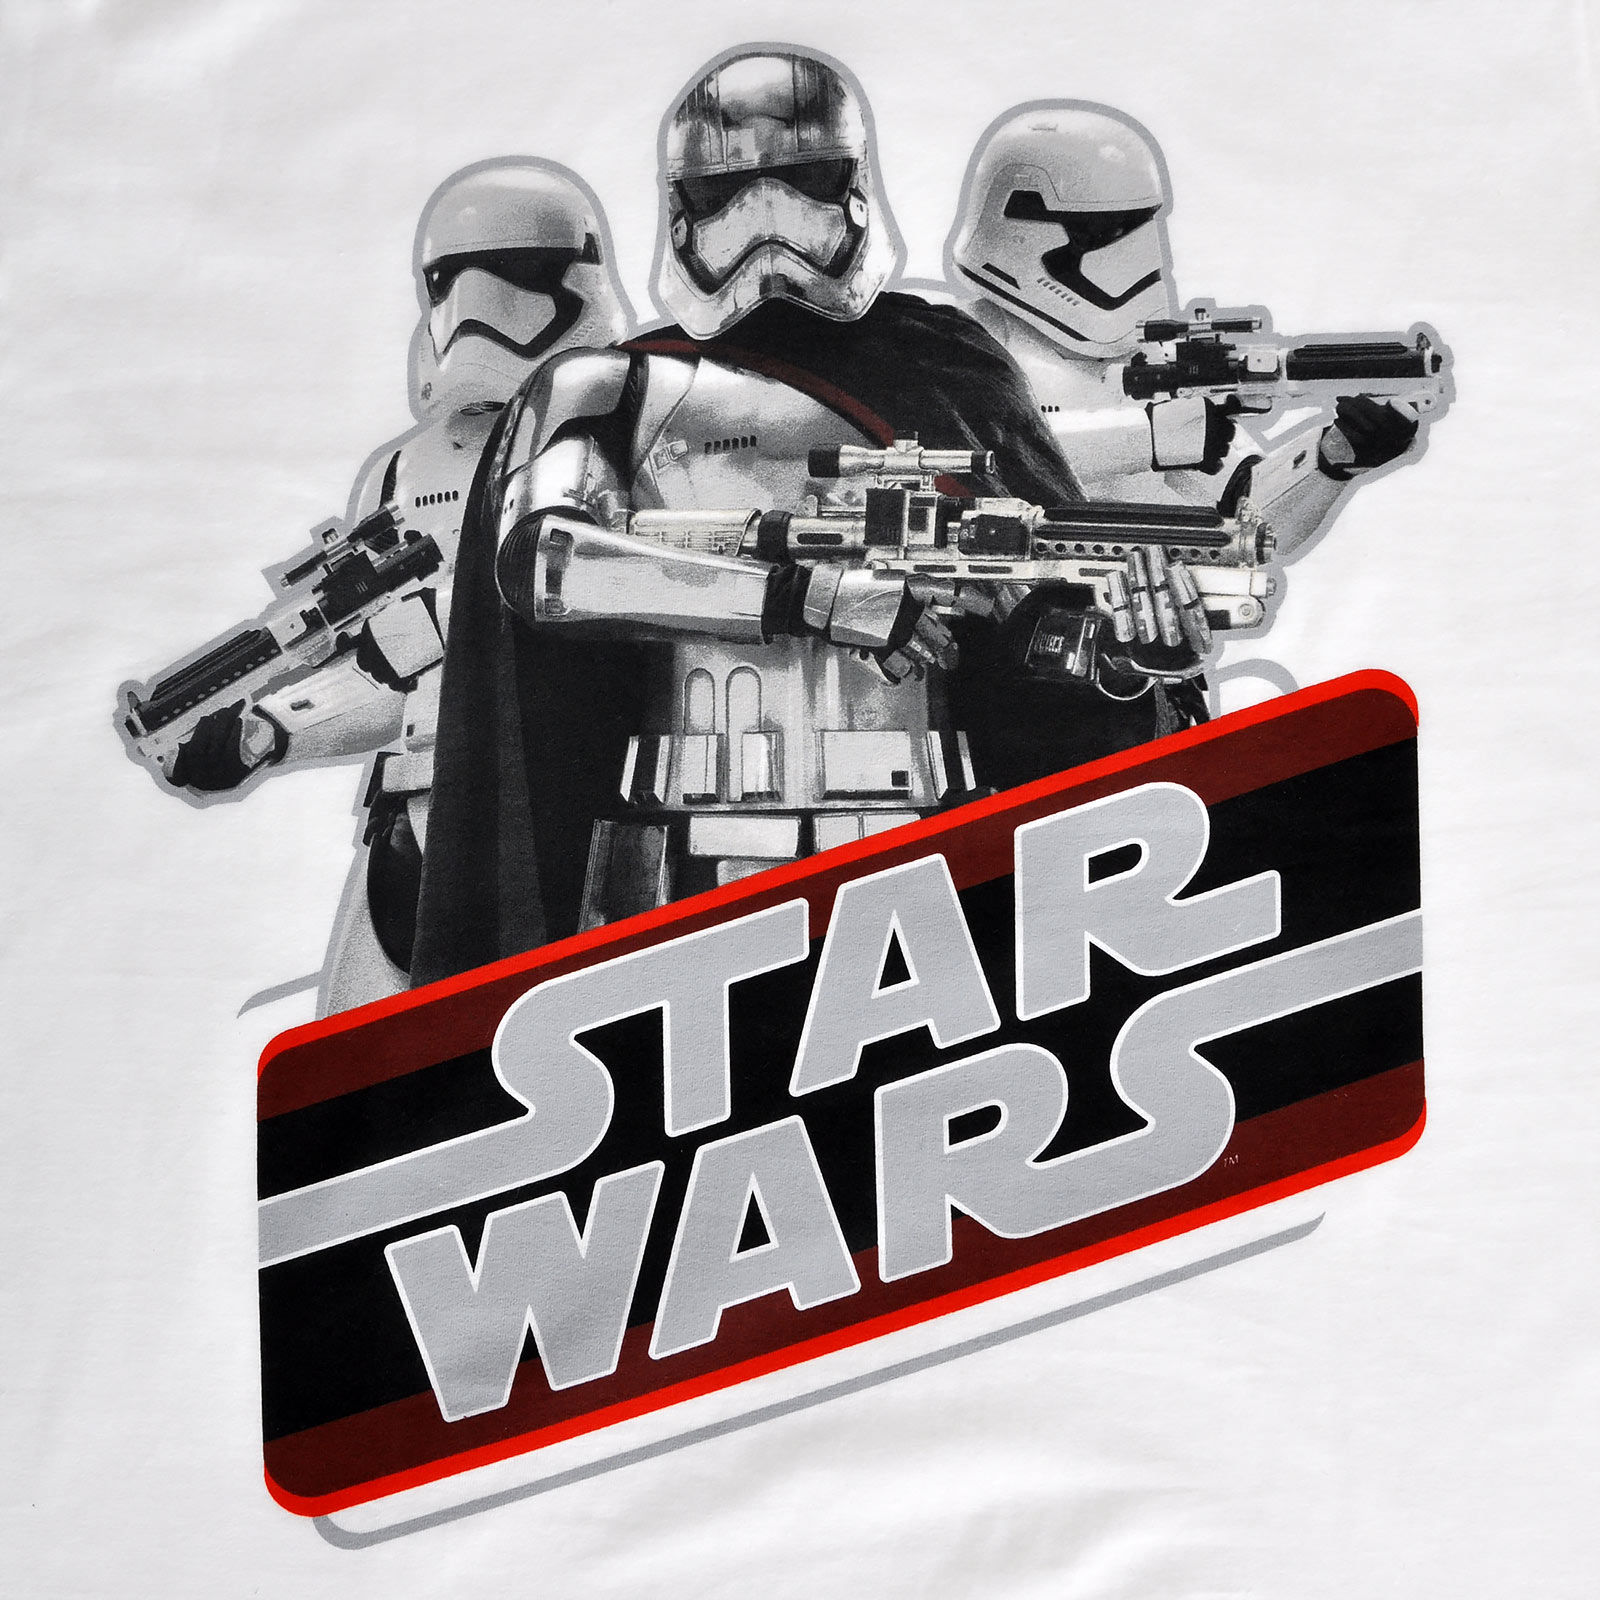 Star Wars - T-shirt Phasma Rétro blanc